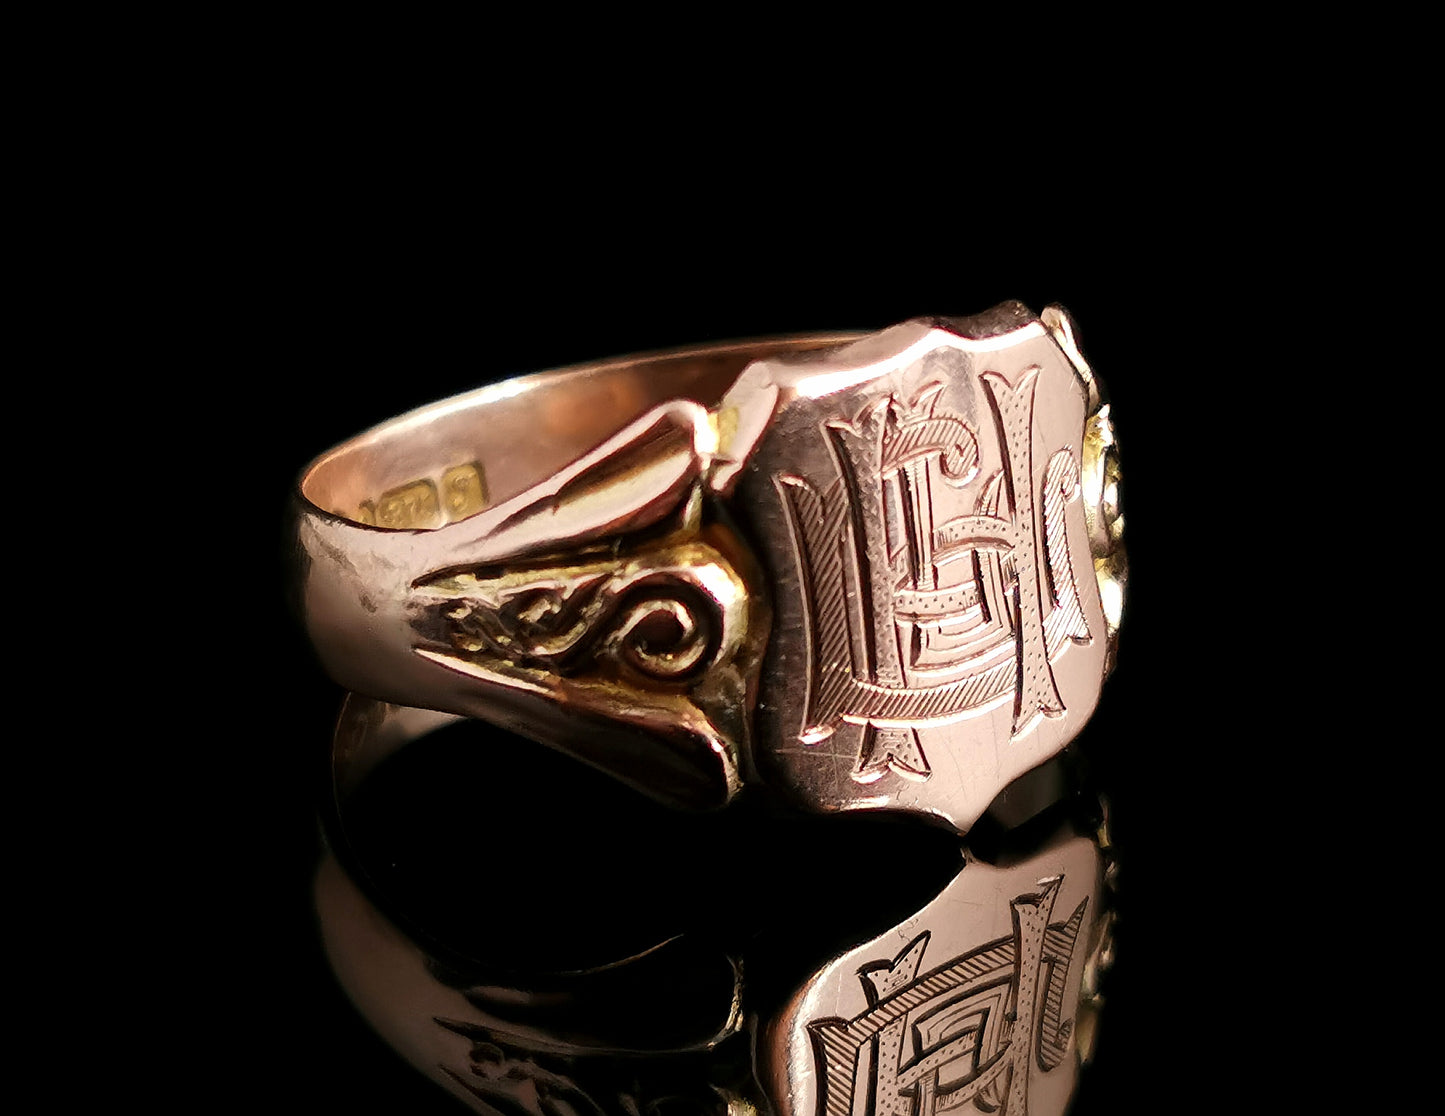 Antique 9ct gold Signet ring, monogrammed